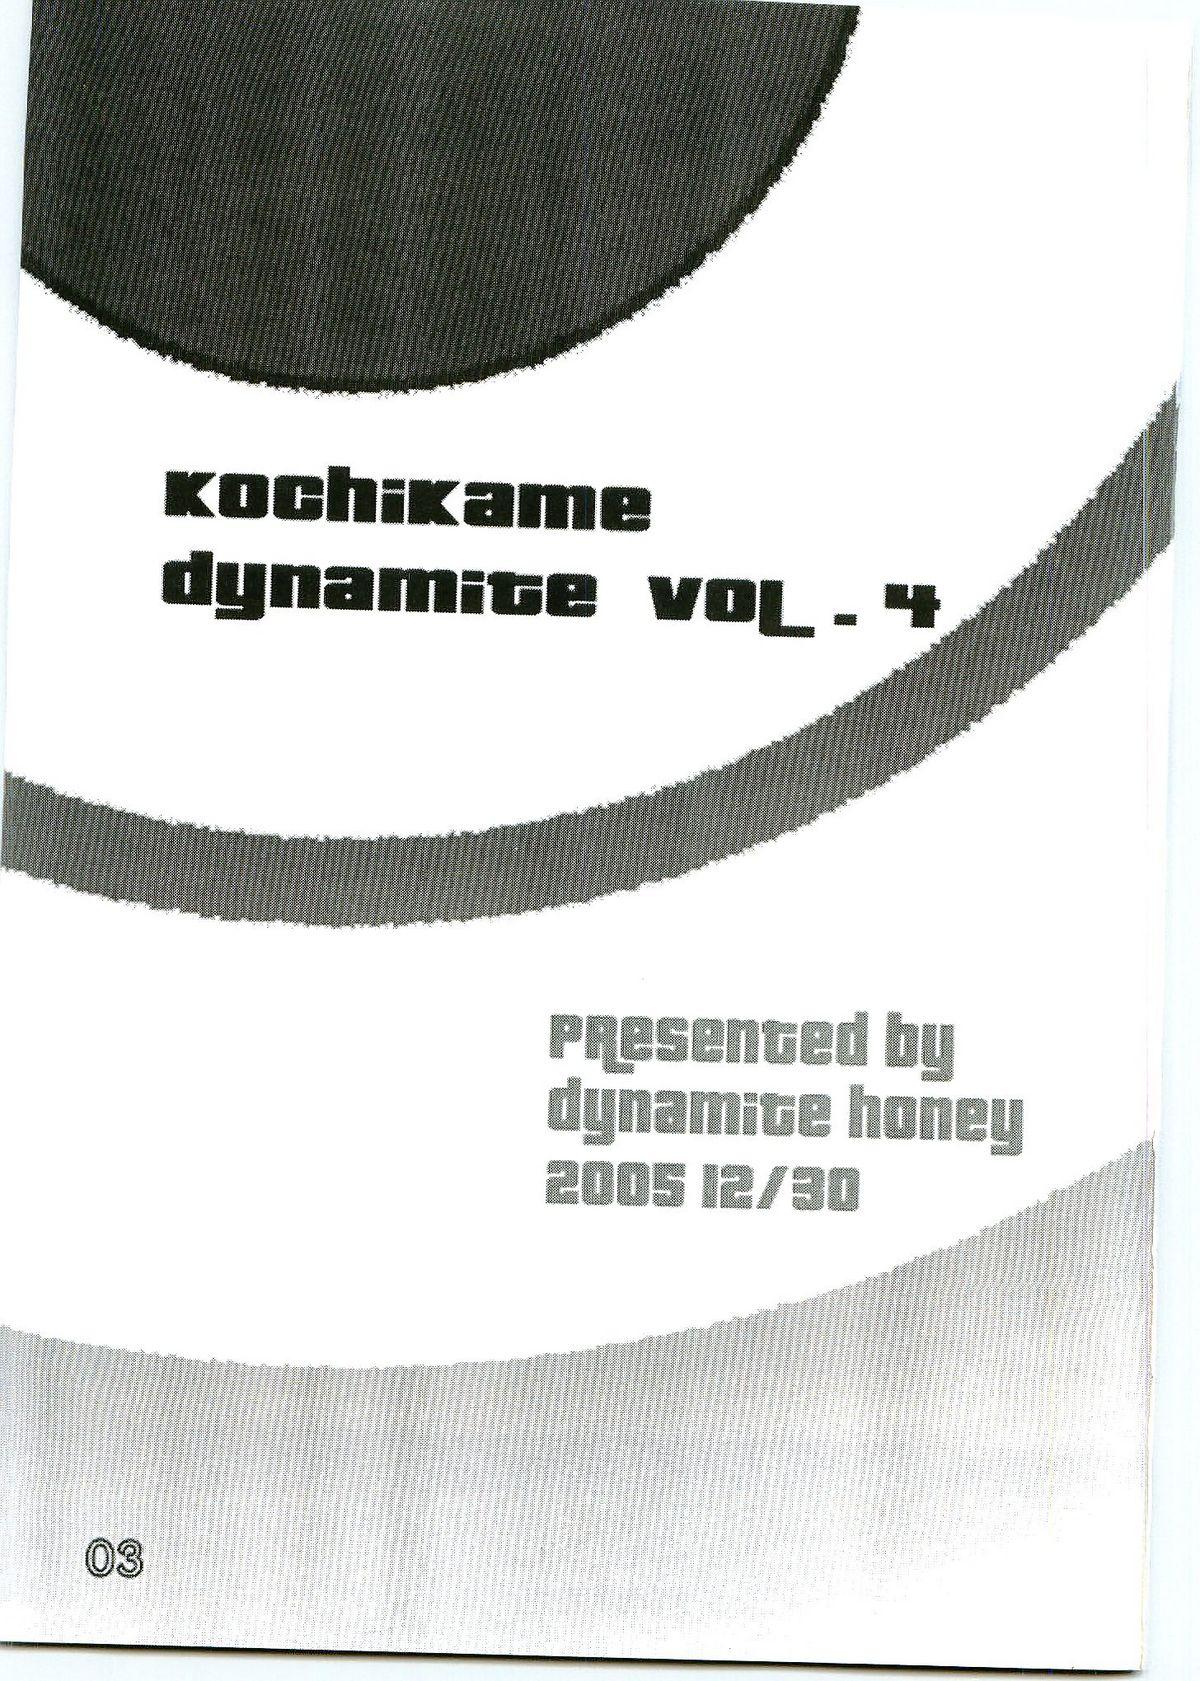 Vietnam Kochikame Dynamite Vol. 4 - Kochikame Boy Girl - Page 2